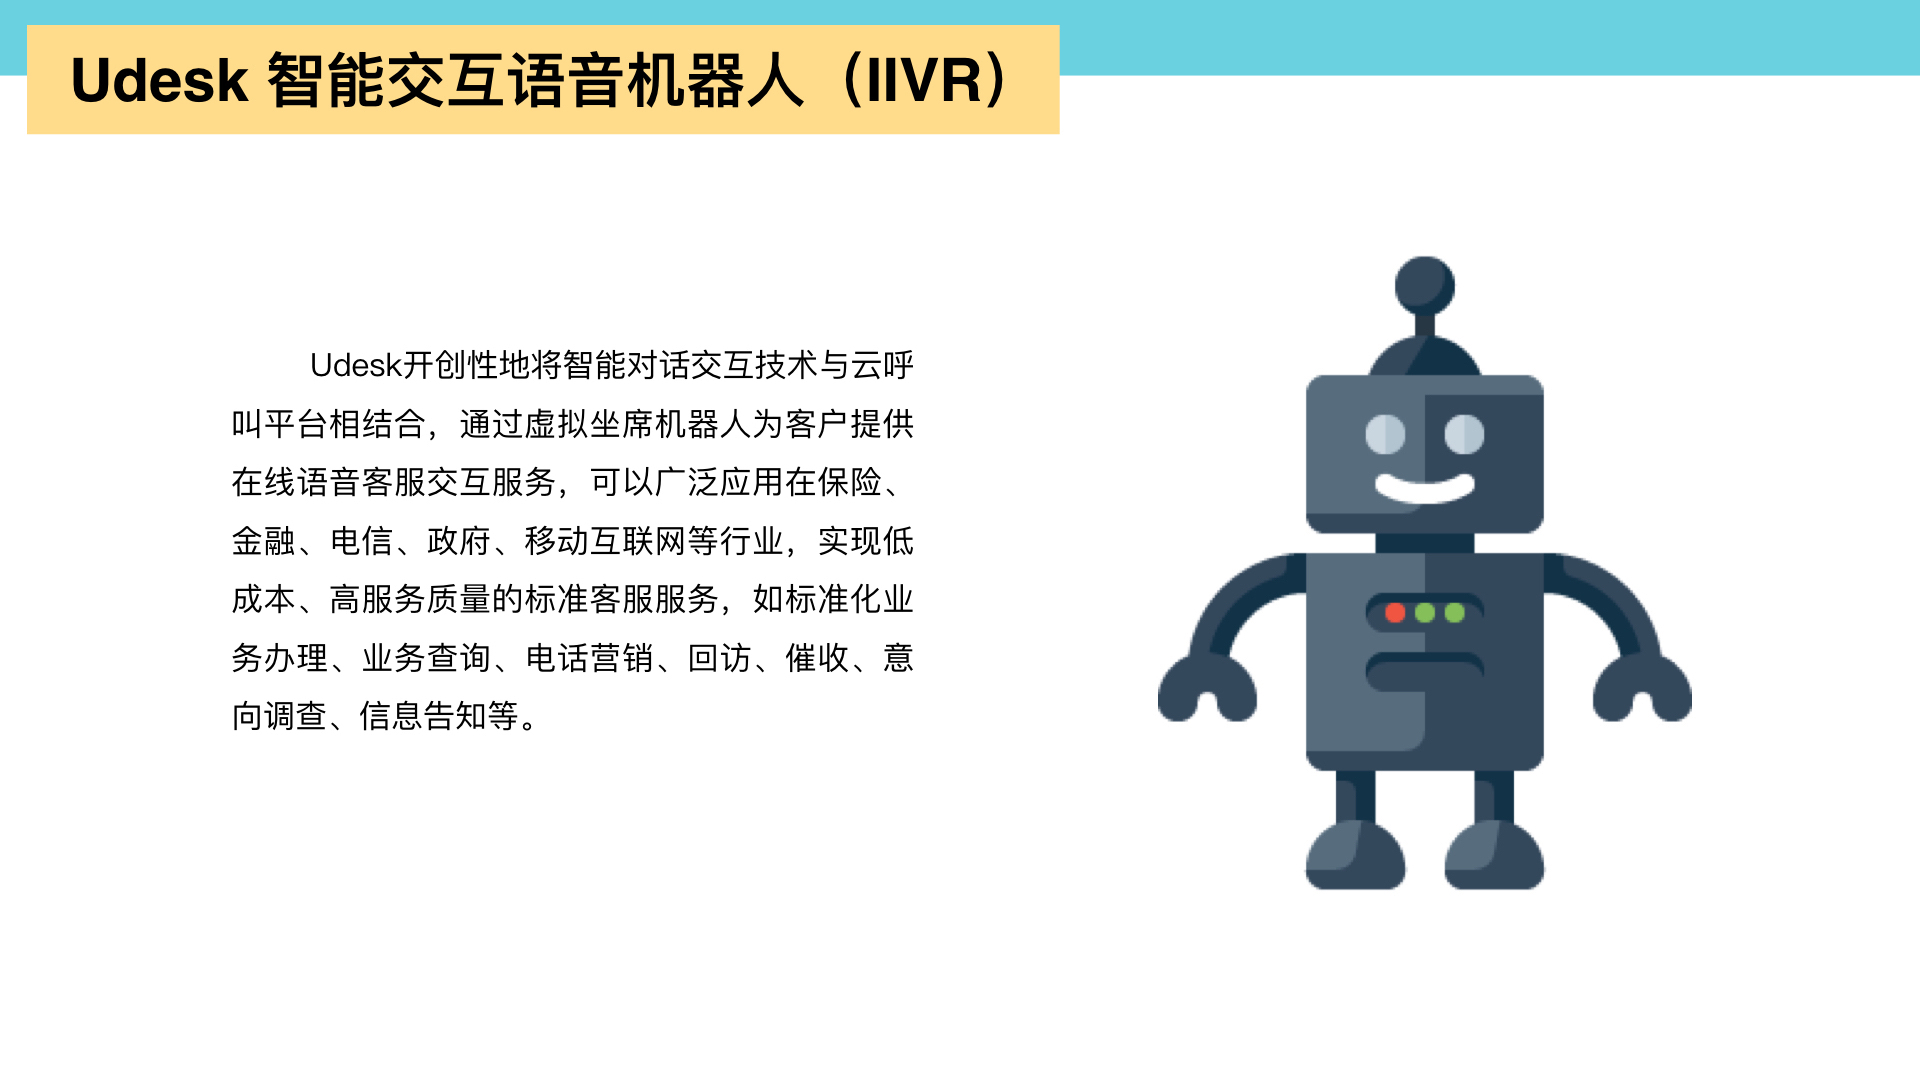 Udesk智能交互语音机器人正式发布！